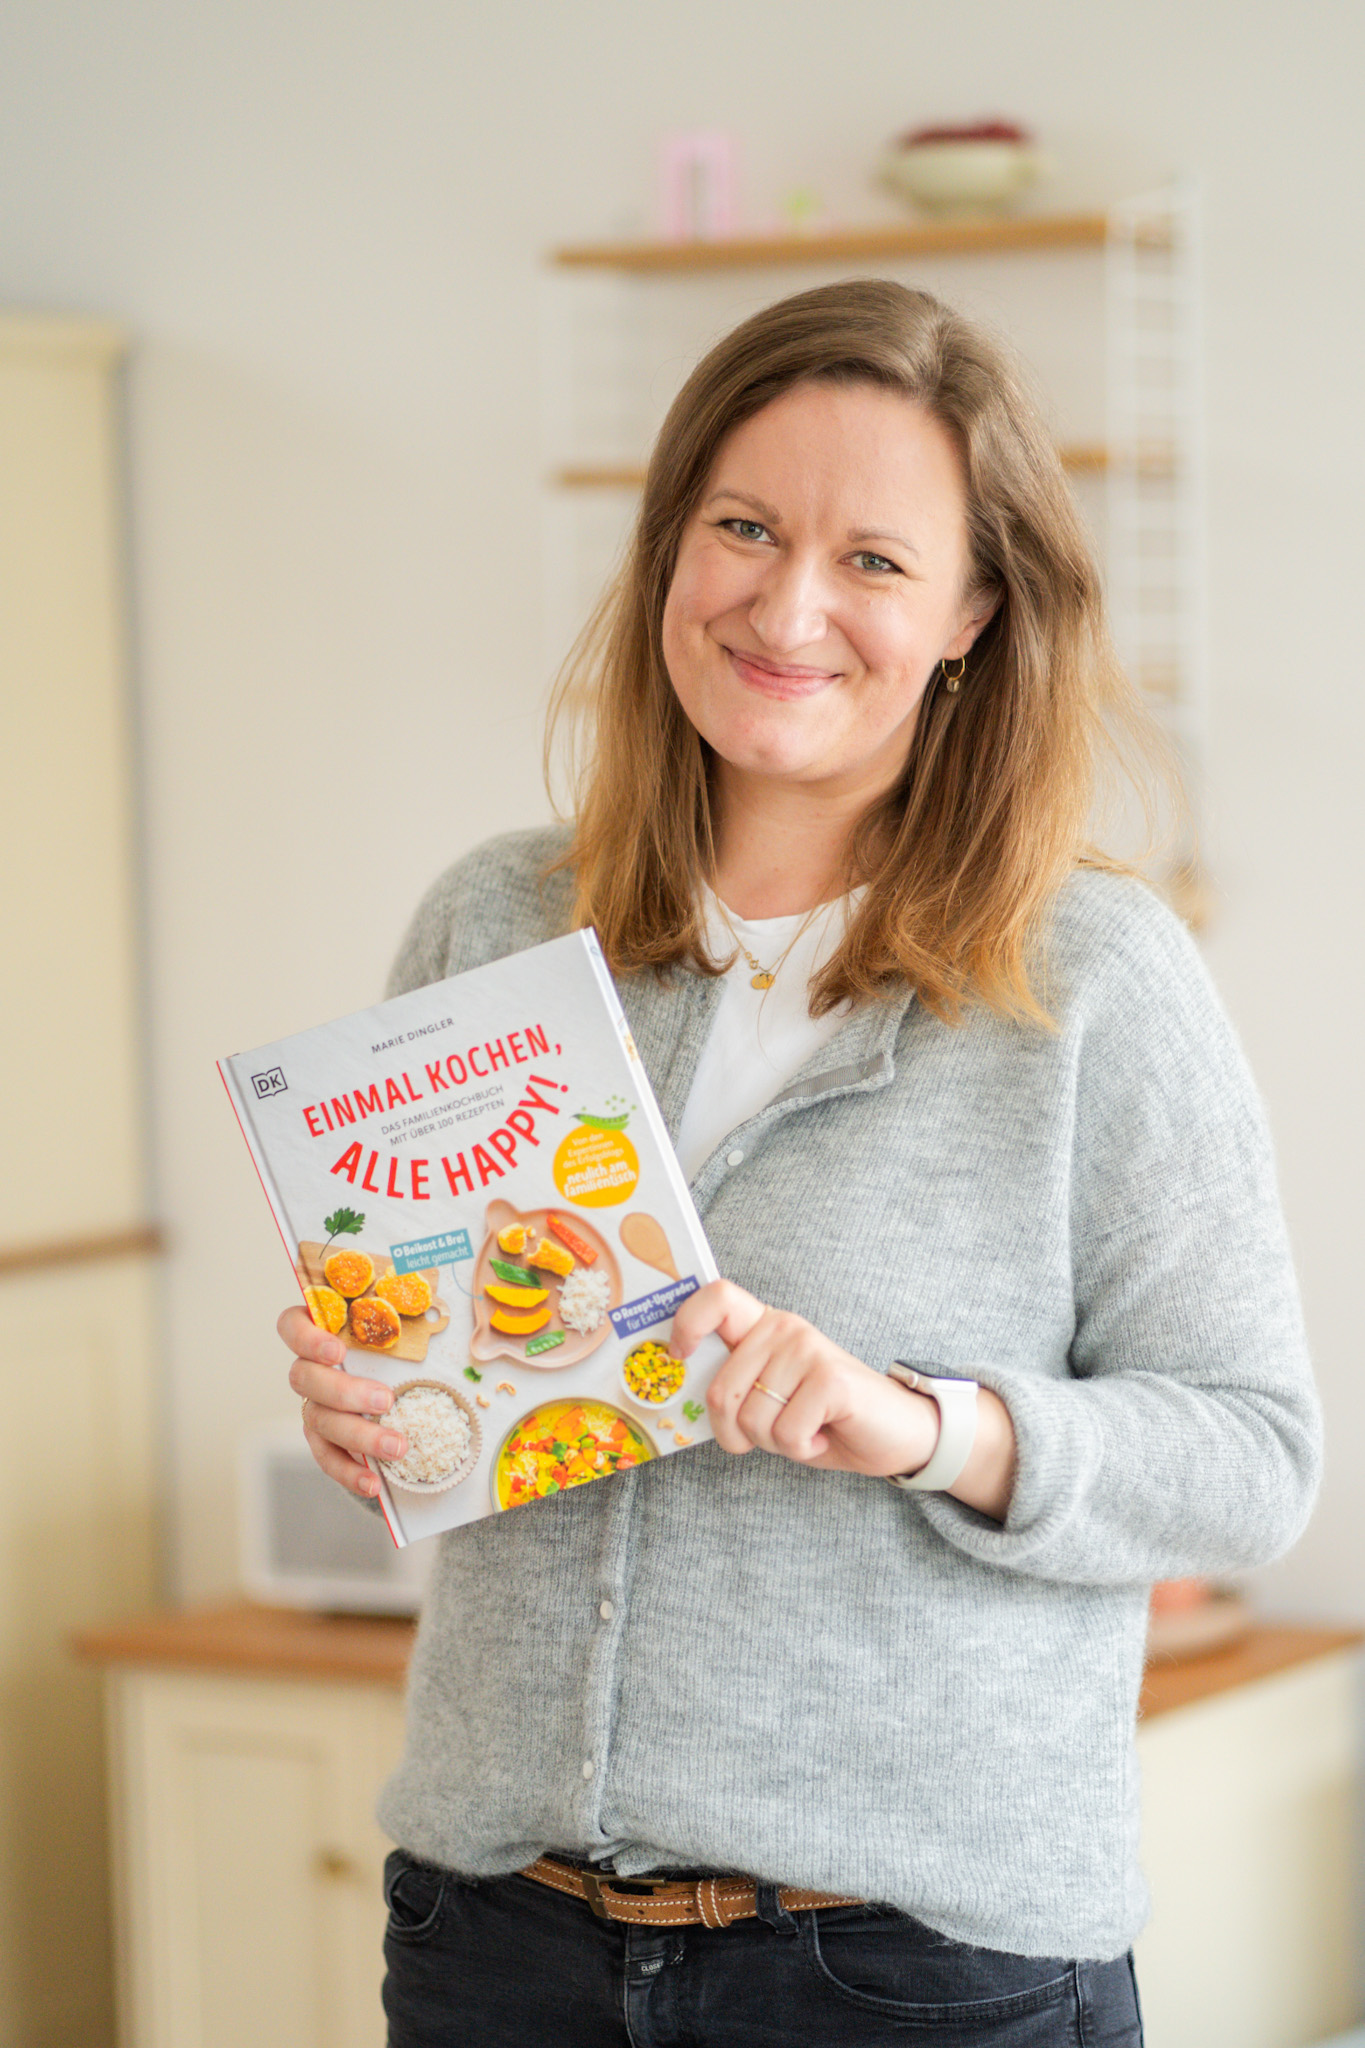 Unser neues Familien-Kochbuch: Einmal kochen, alle happy!